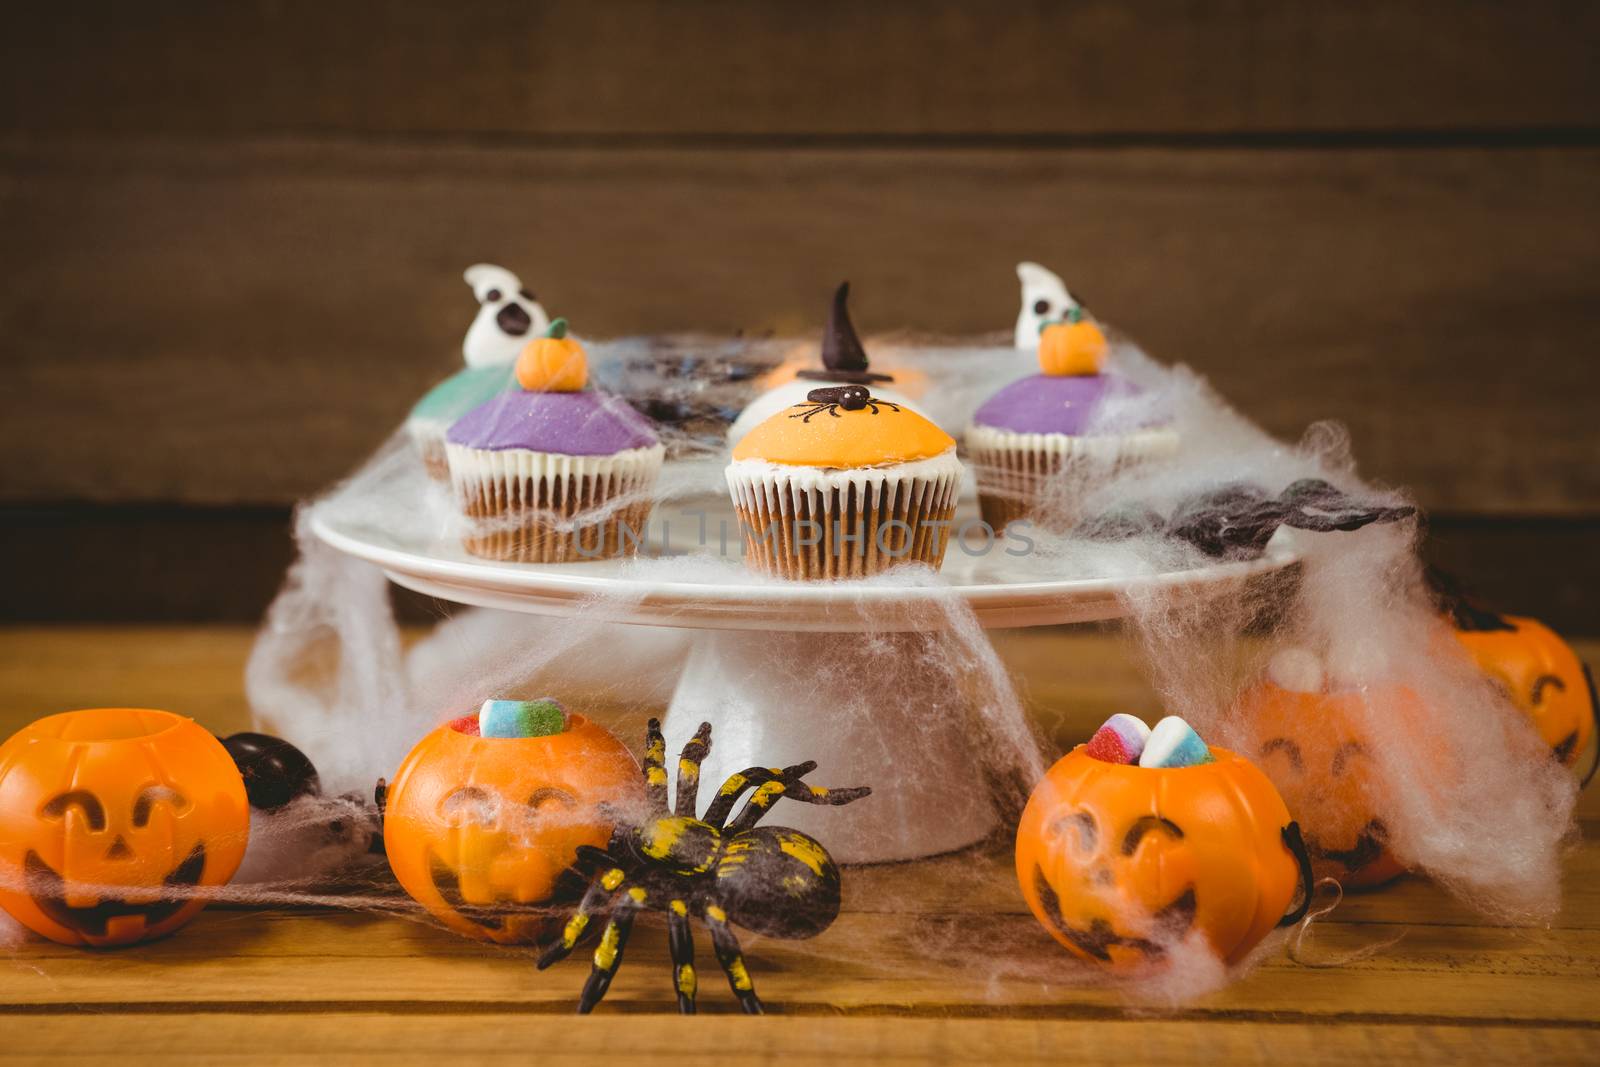 Sweet food on wooden table during Halloween by Wavebreakmedia